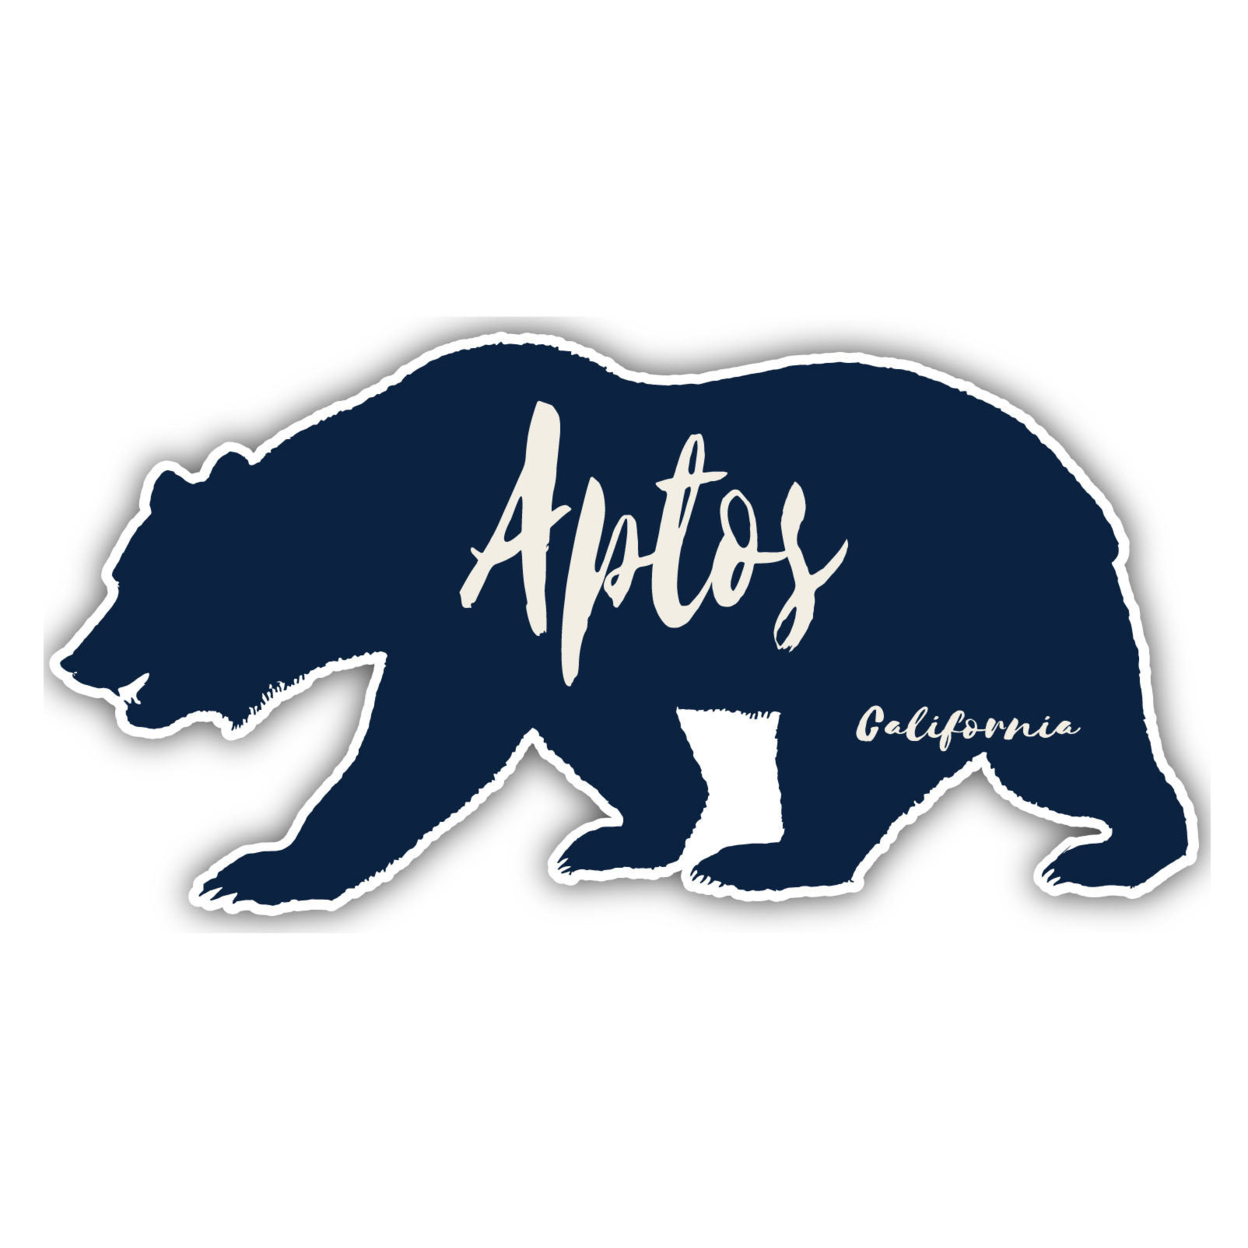 Aptos California Souvenir Decorative Stickers (Choose Theme And Size) - Single Unit, 12-Inch, Adventures Awaits